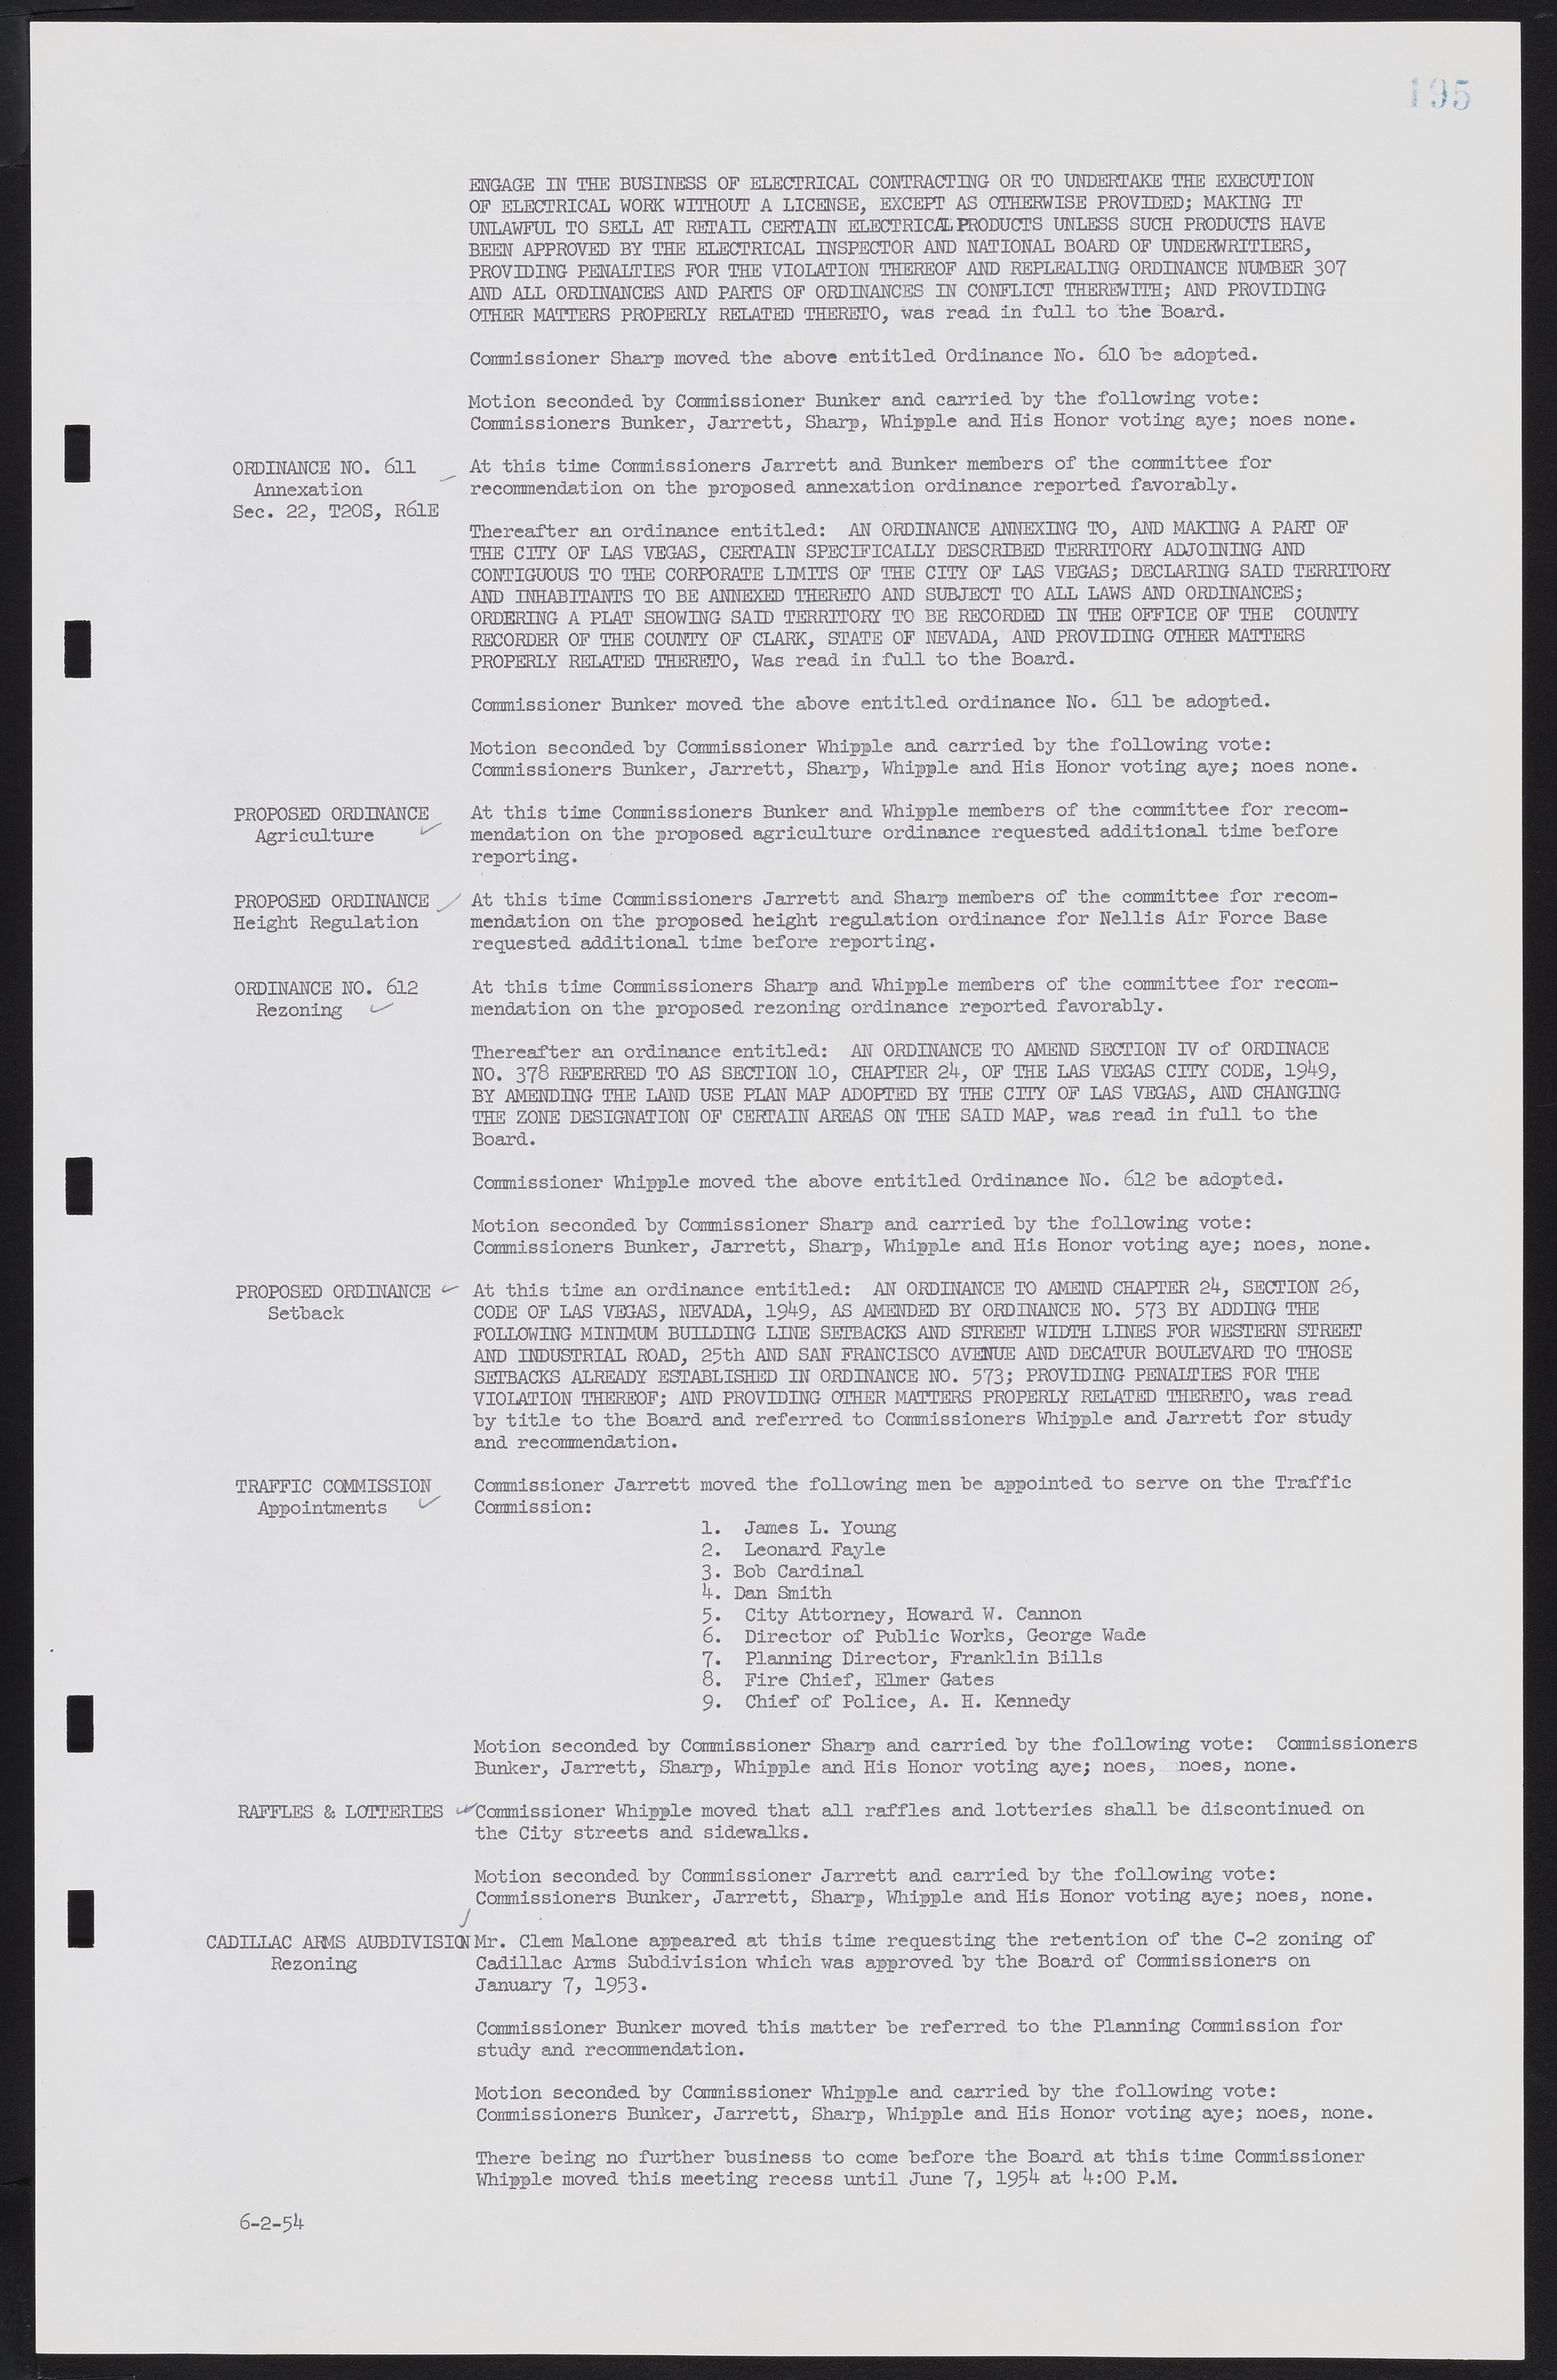 Las Vegas City Commission Minutes, February 17, 1954 to September 21, 1955, lvc000009-201